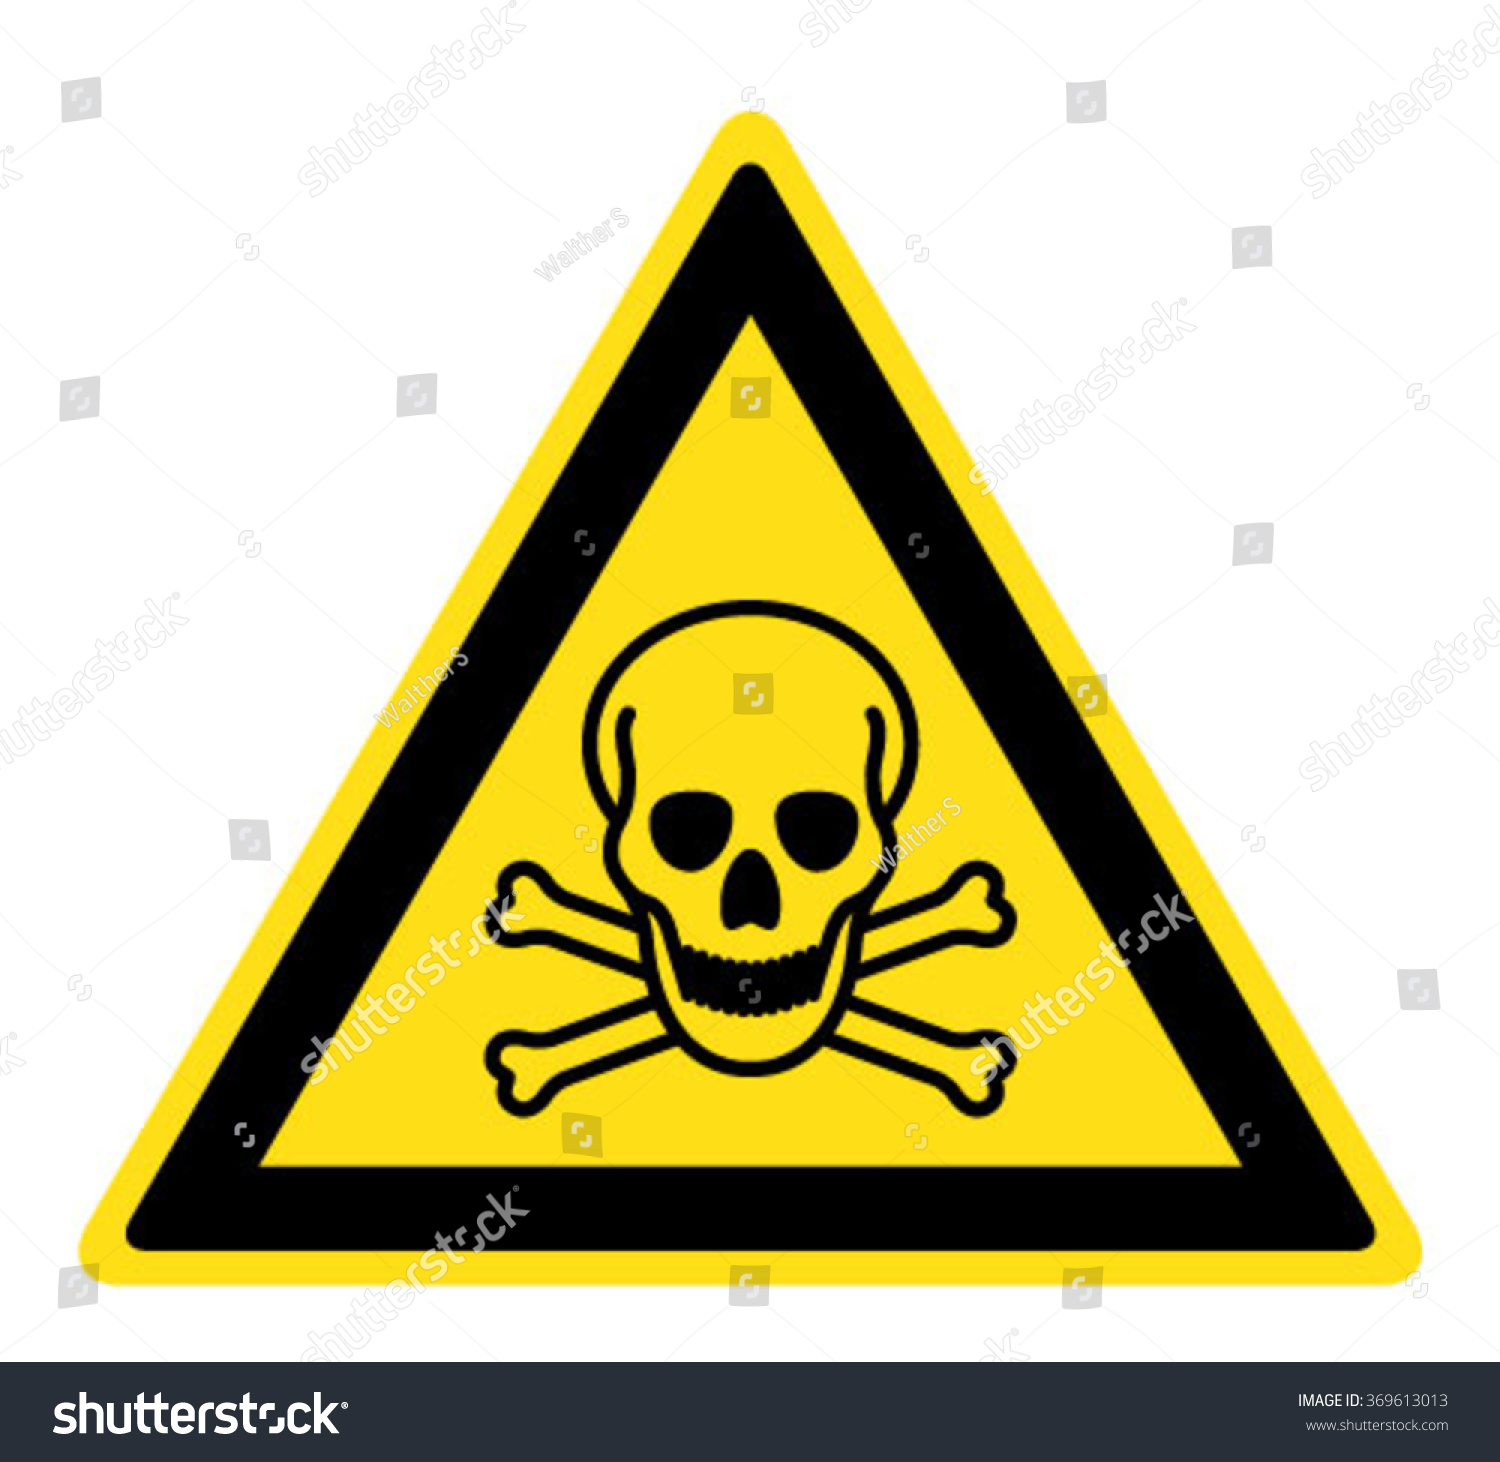 Resultado de imagen para warning sign  - toxic material